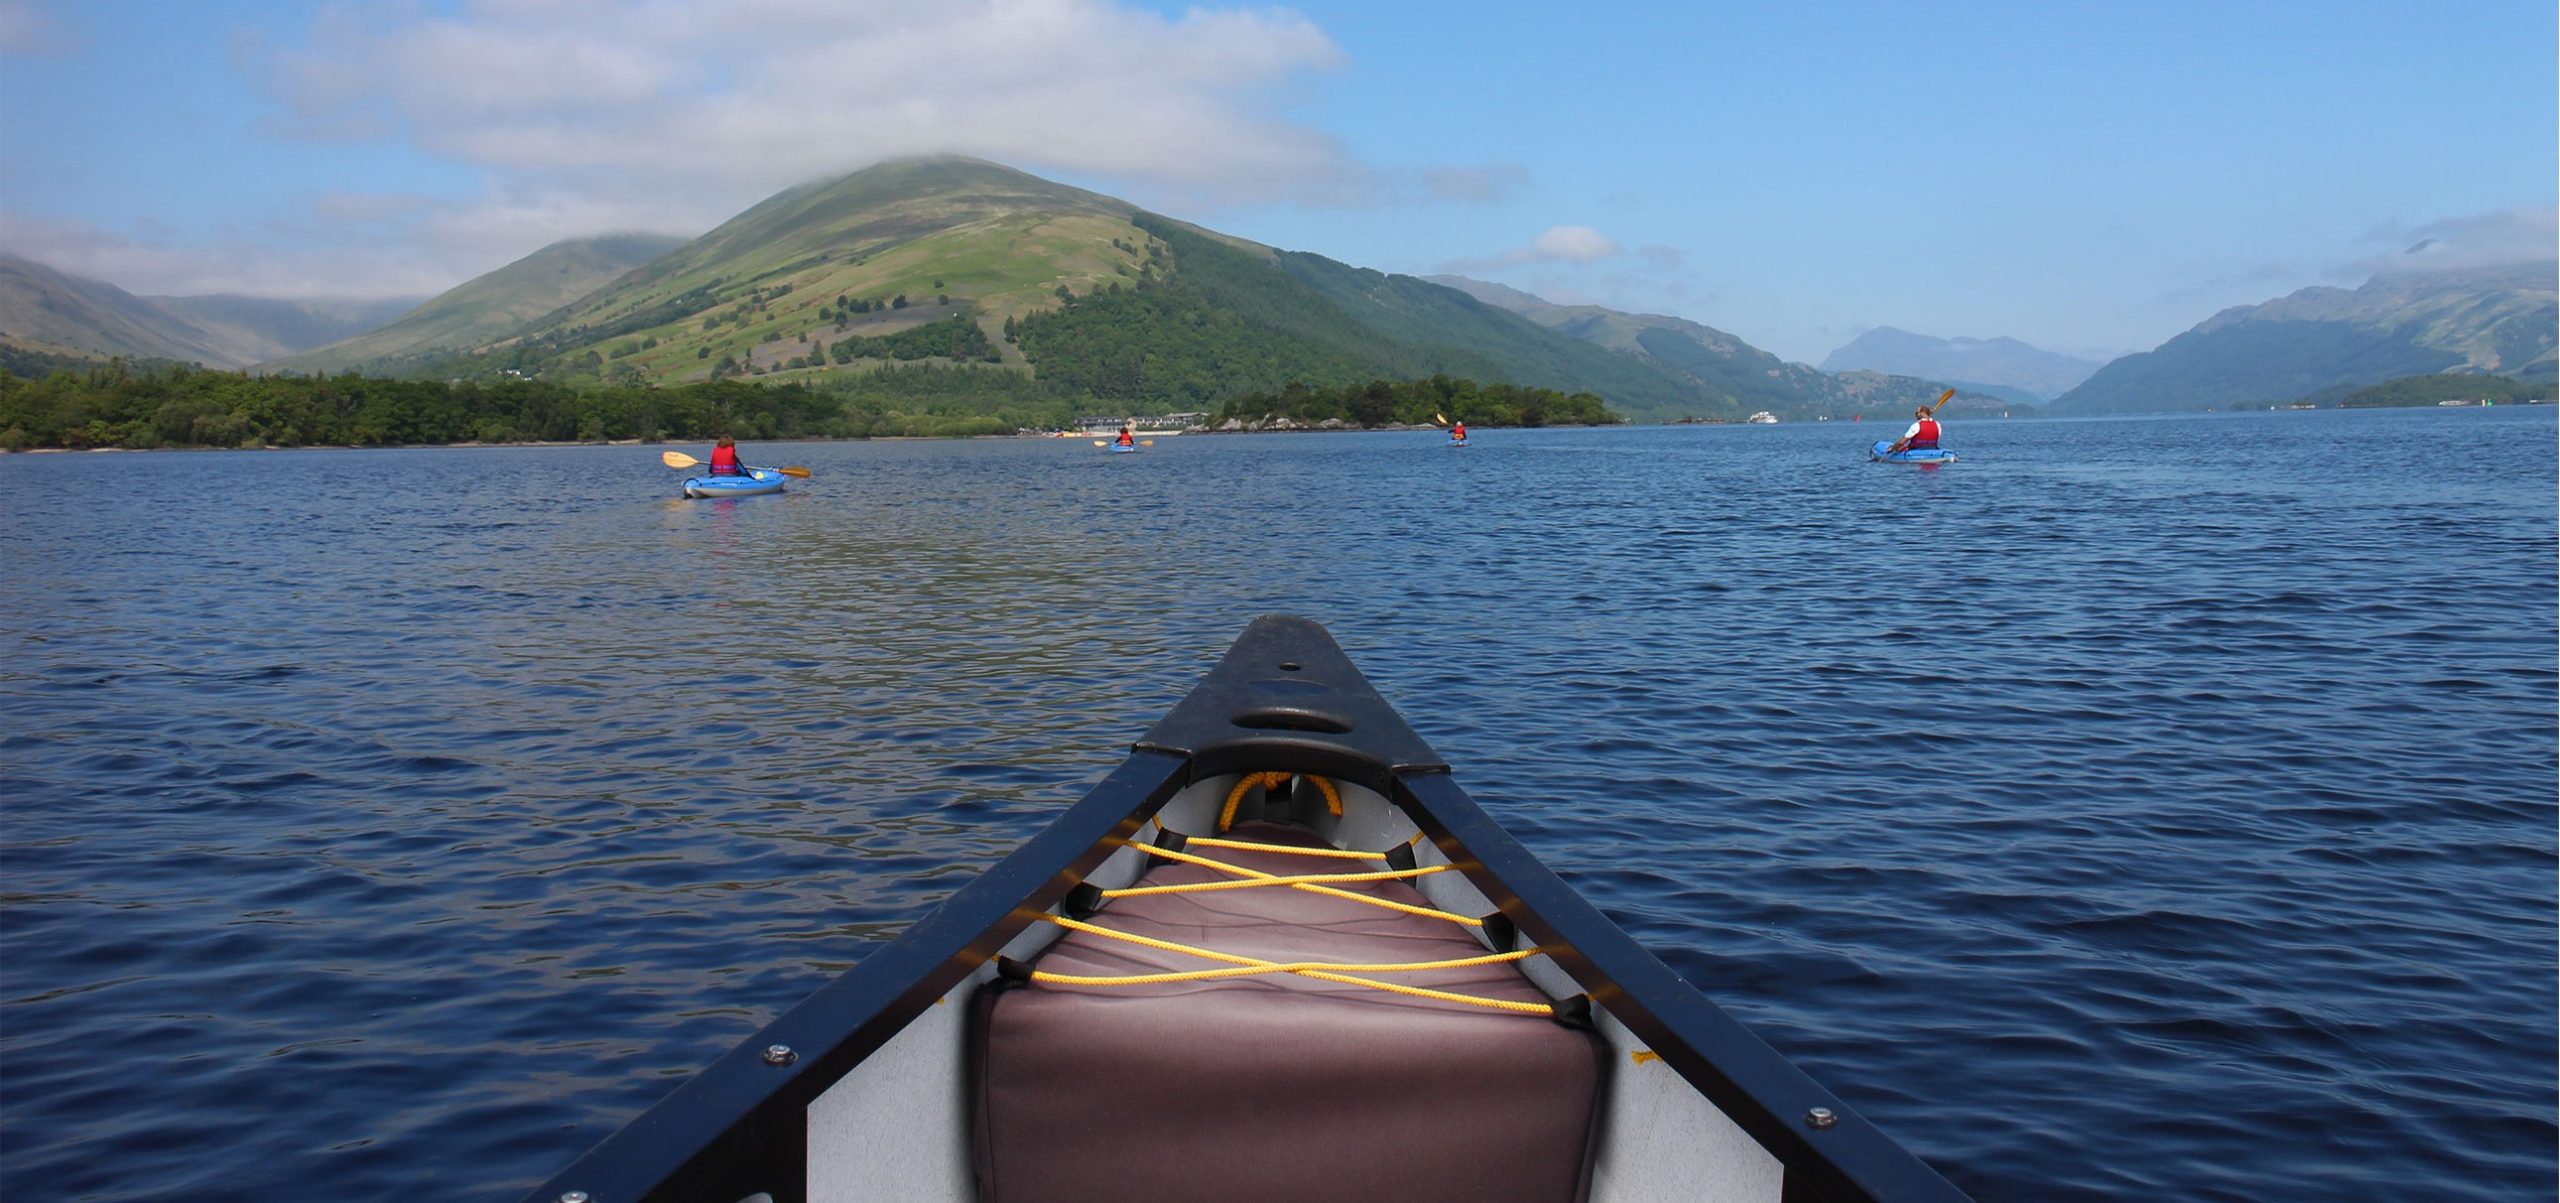 doty cola share family canoe trip goes wrong photos